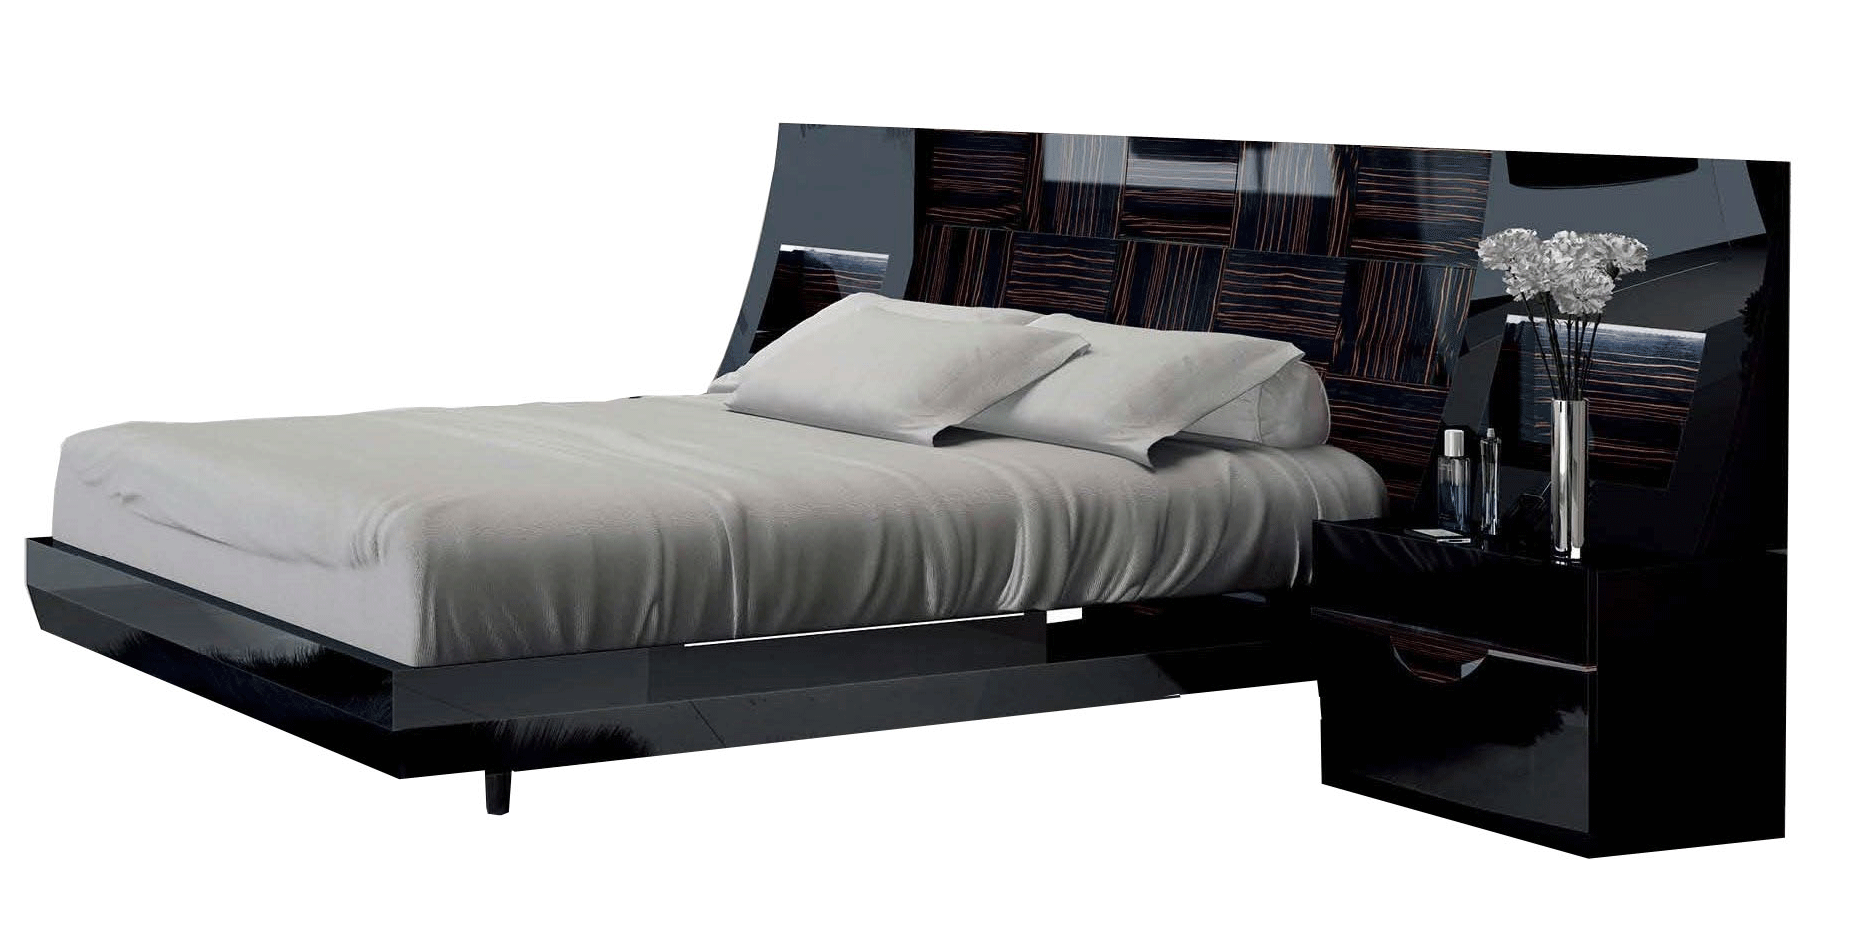 Brands Garcia Sabate, Modern Bedroom Spain Marbella Bed QS bed ONLY